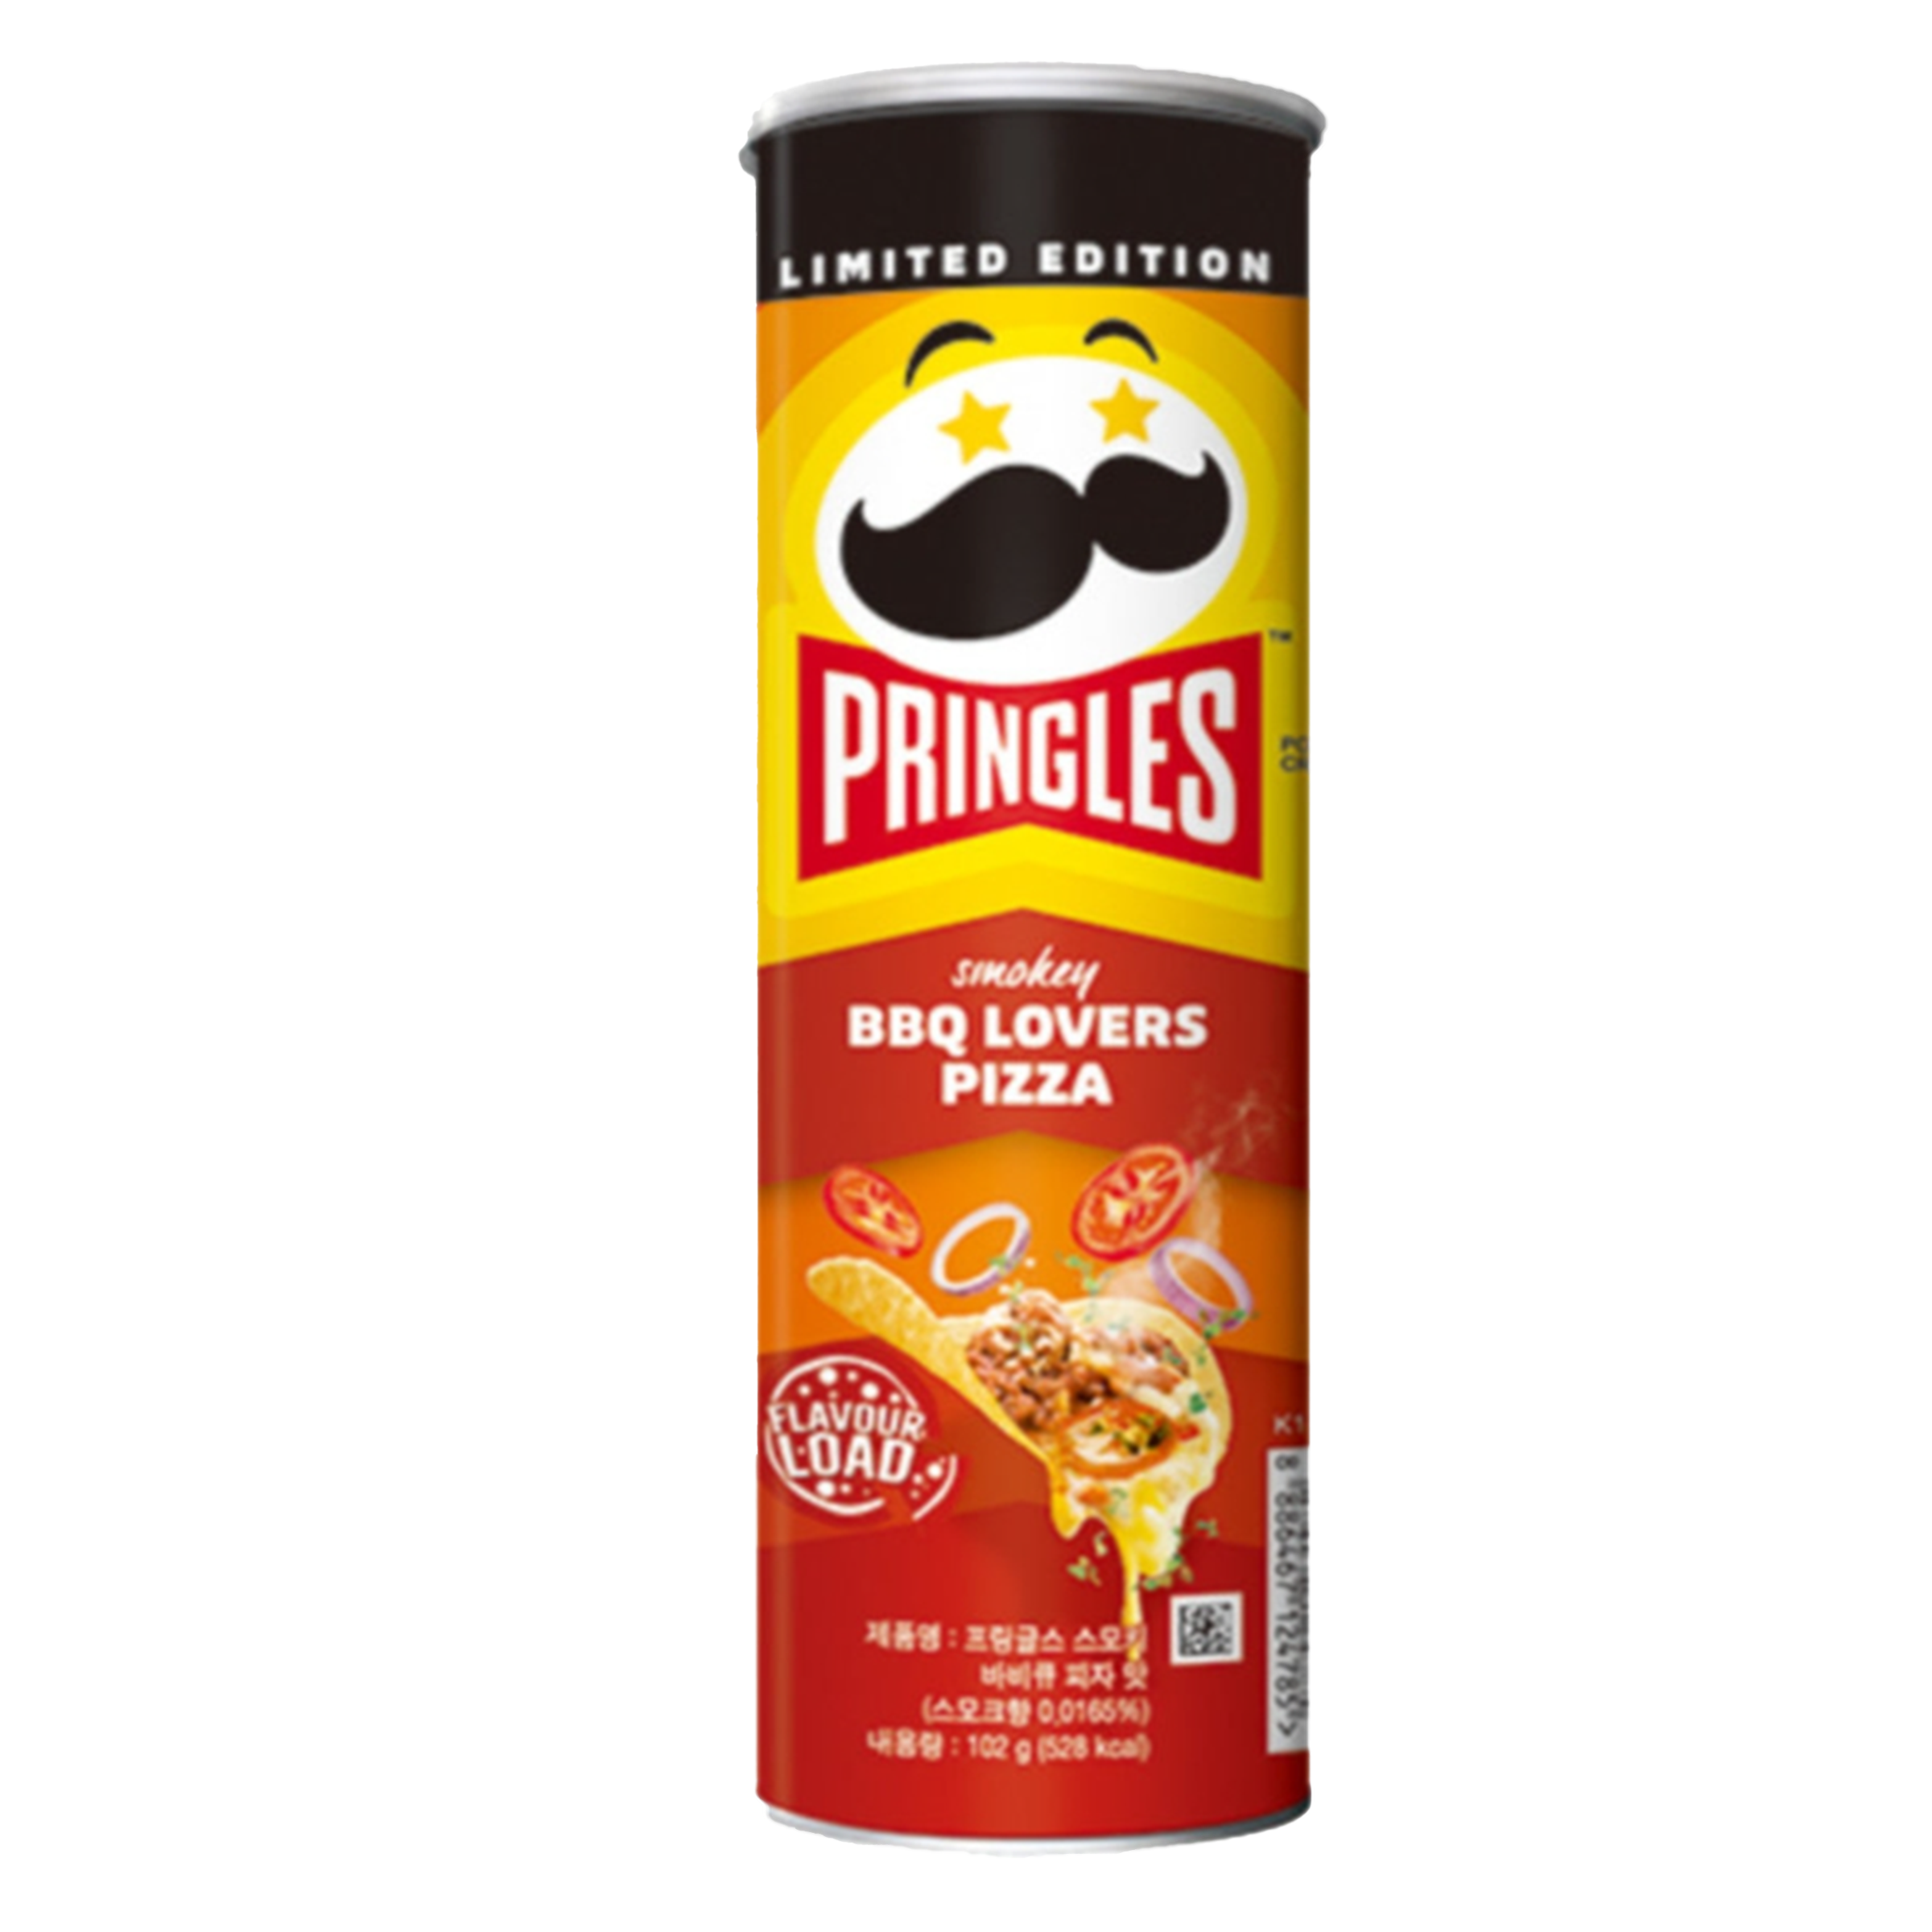 Pringles - Smoky BBQ lovers Pizza (Korea)